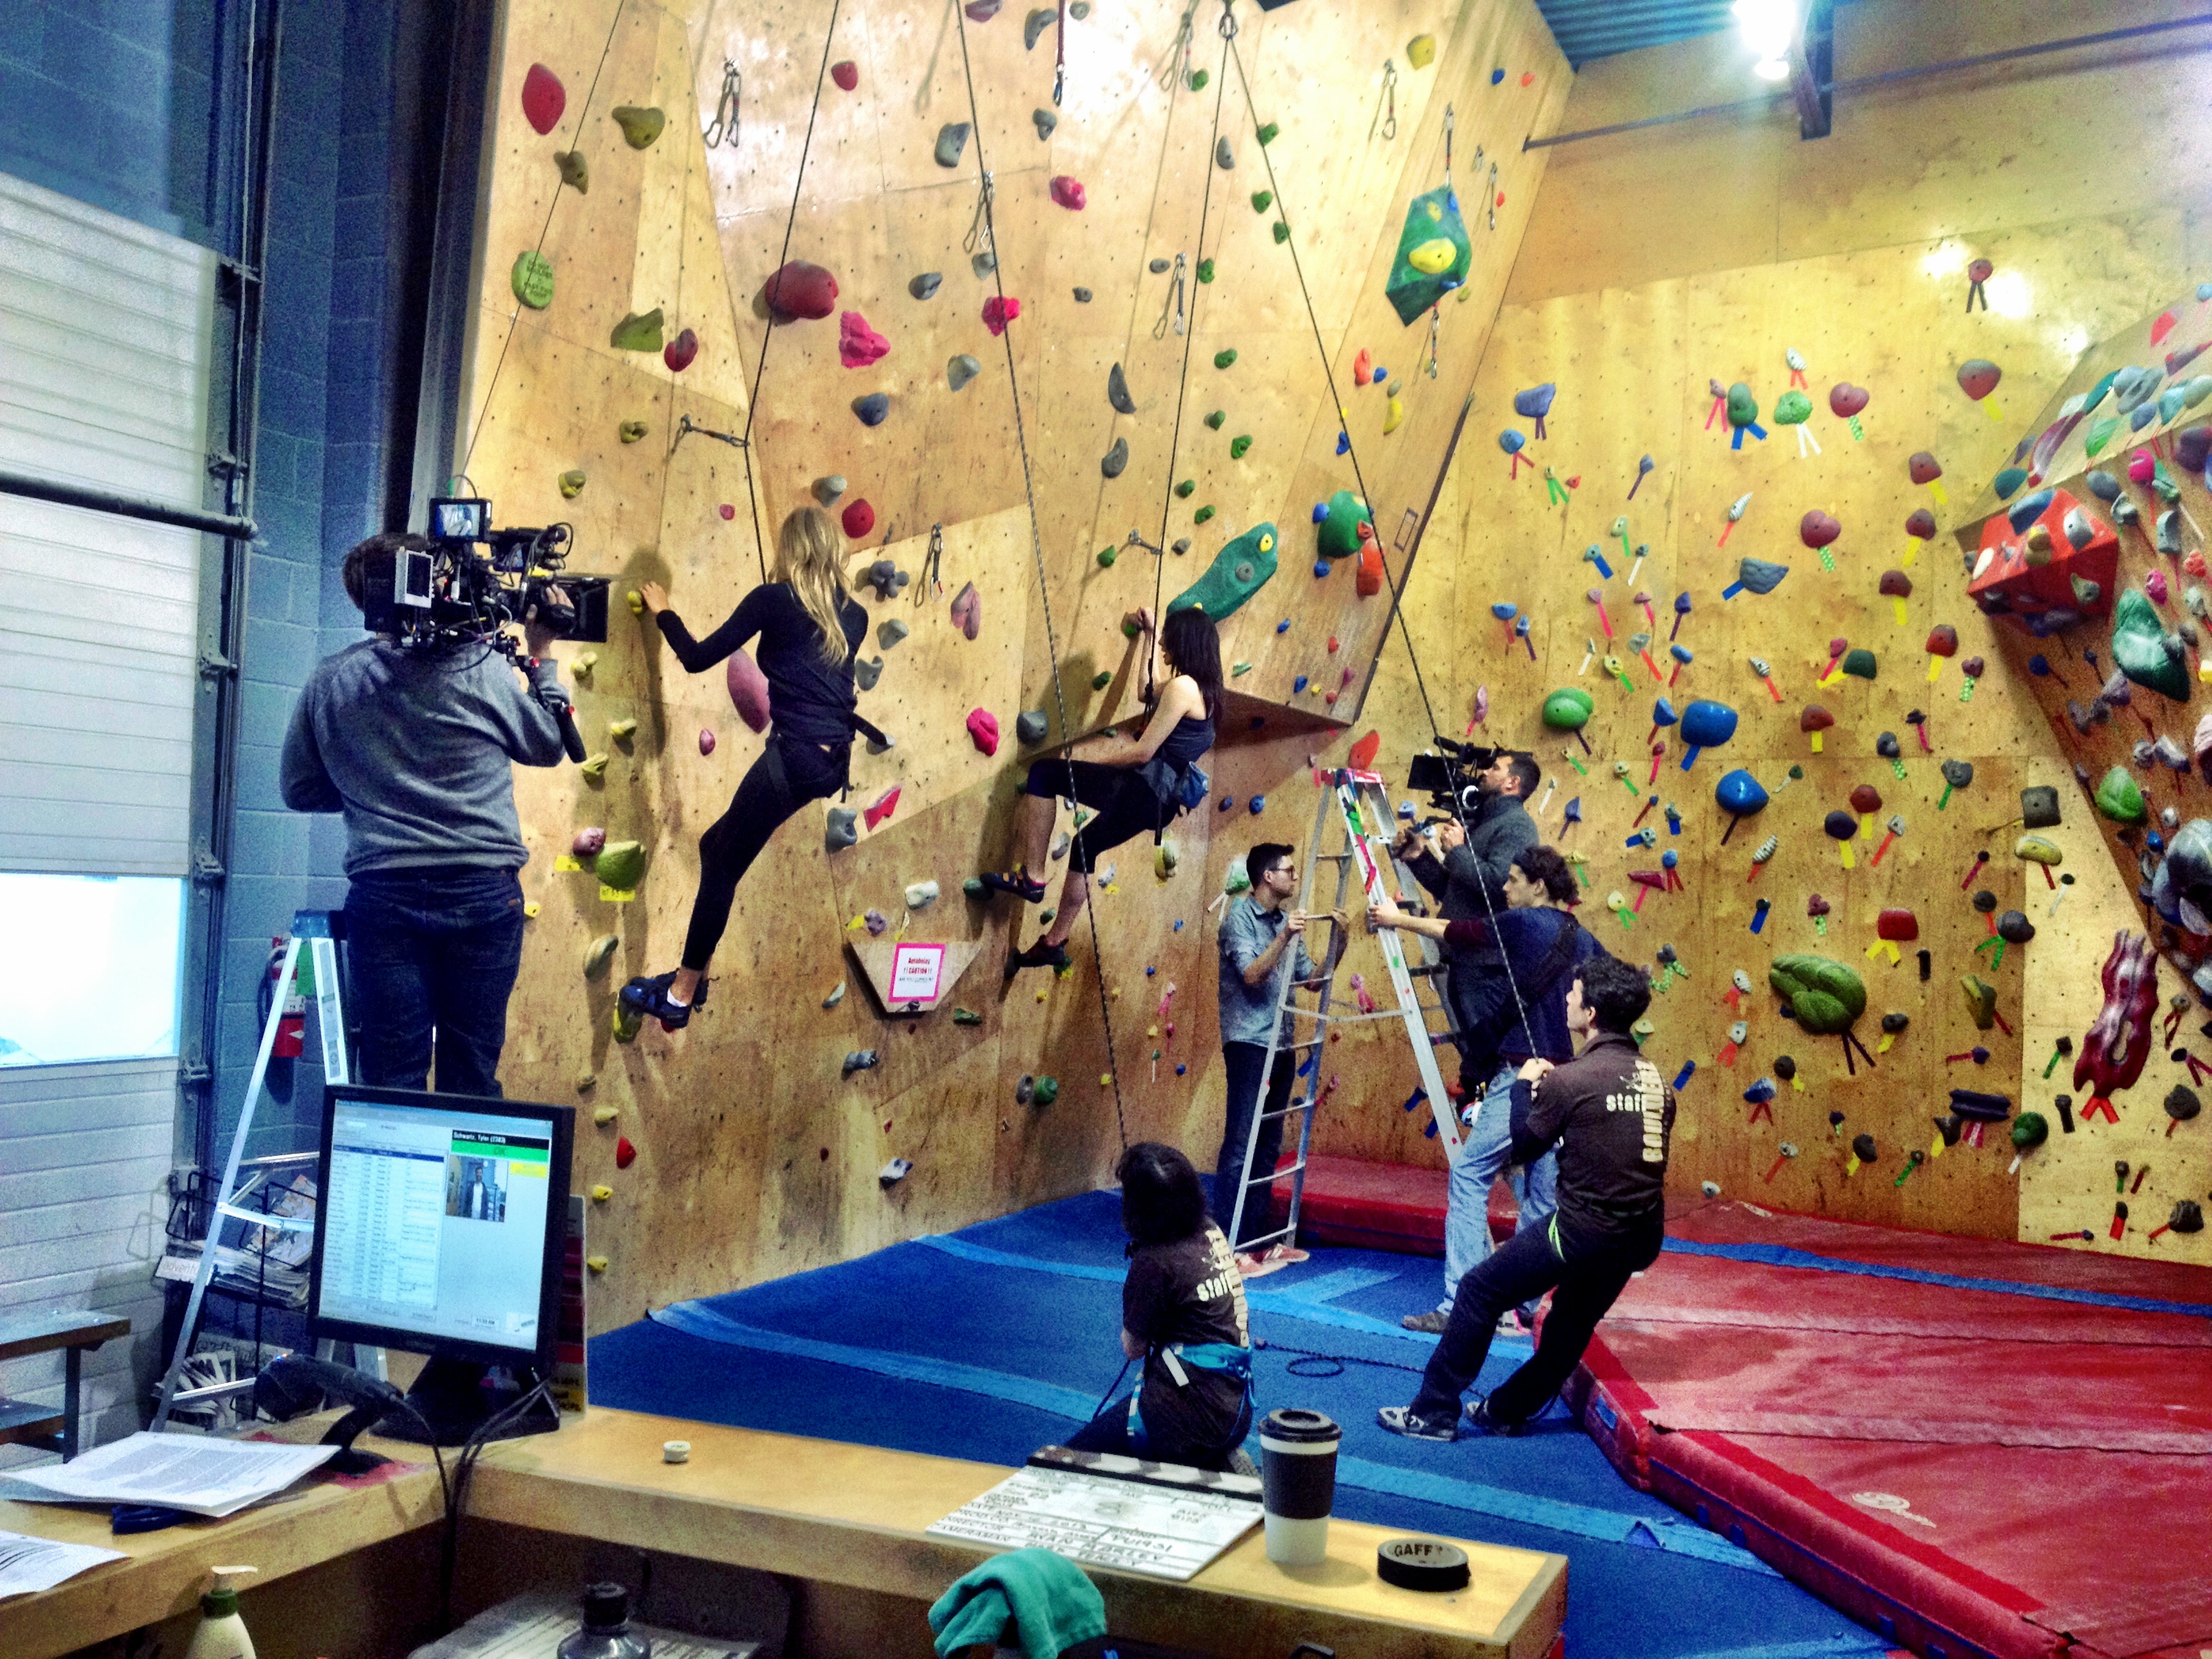 The 'ol rock climbing dialogue scene. Brave New Girls with Jenna Talackova.